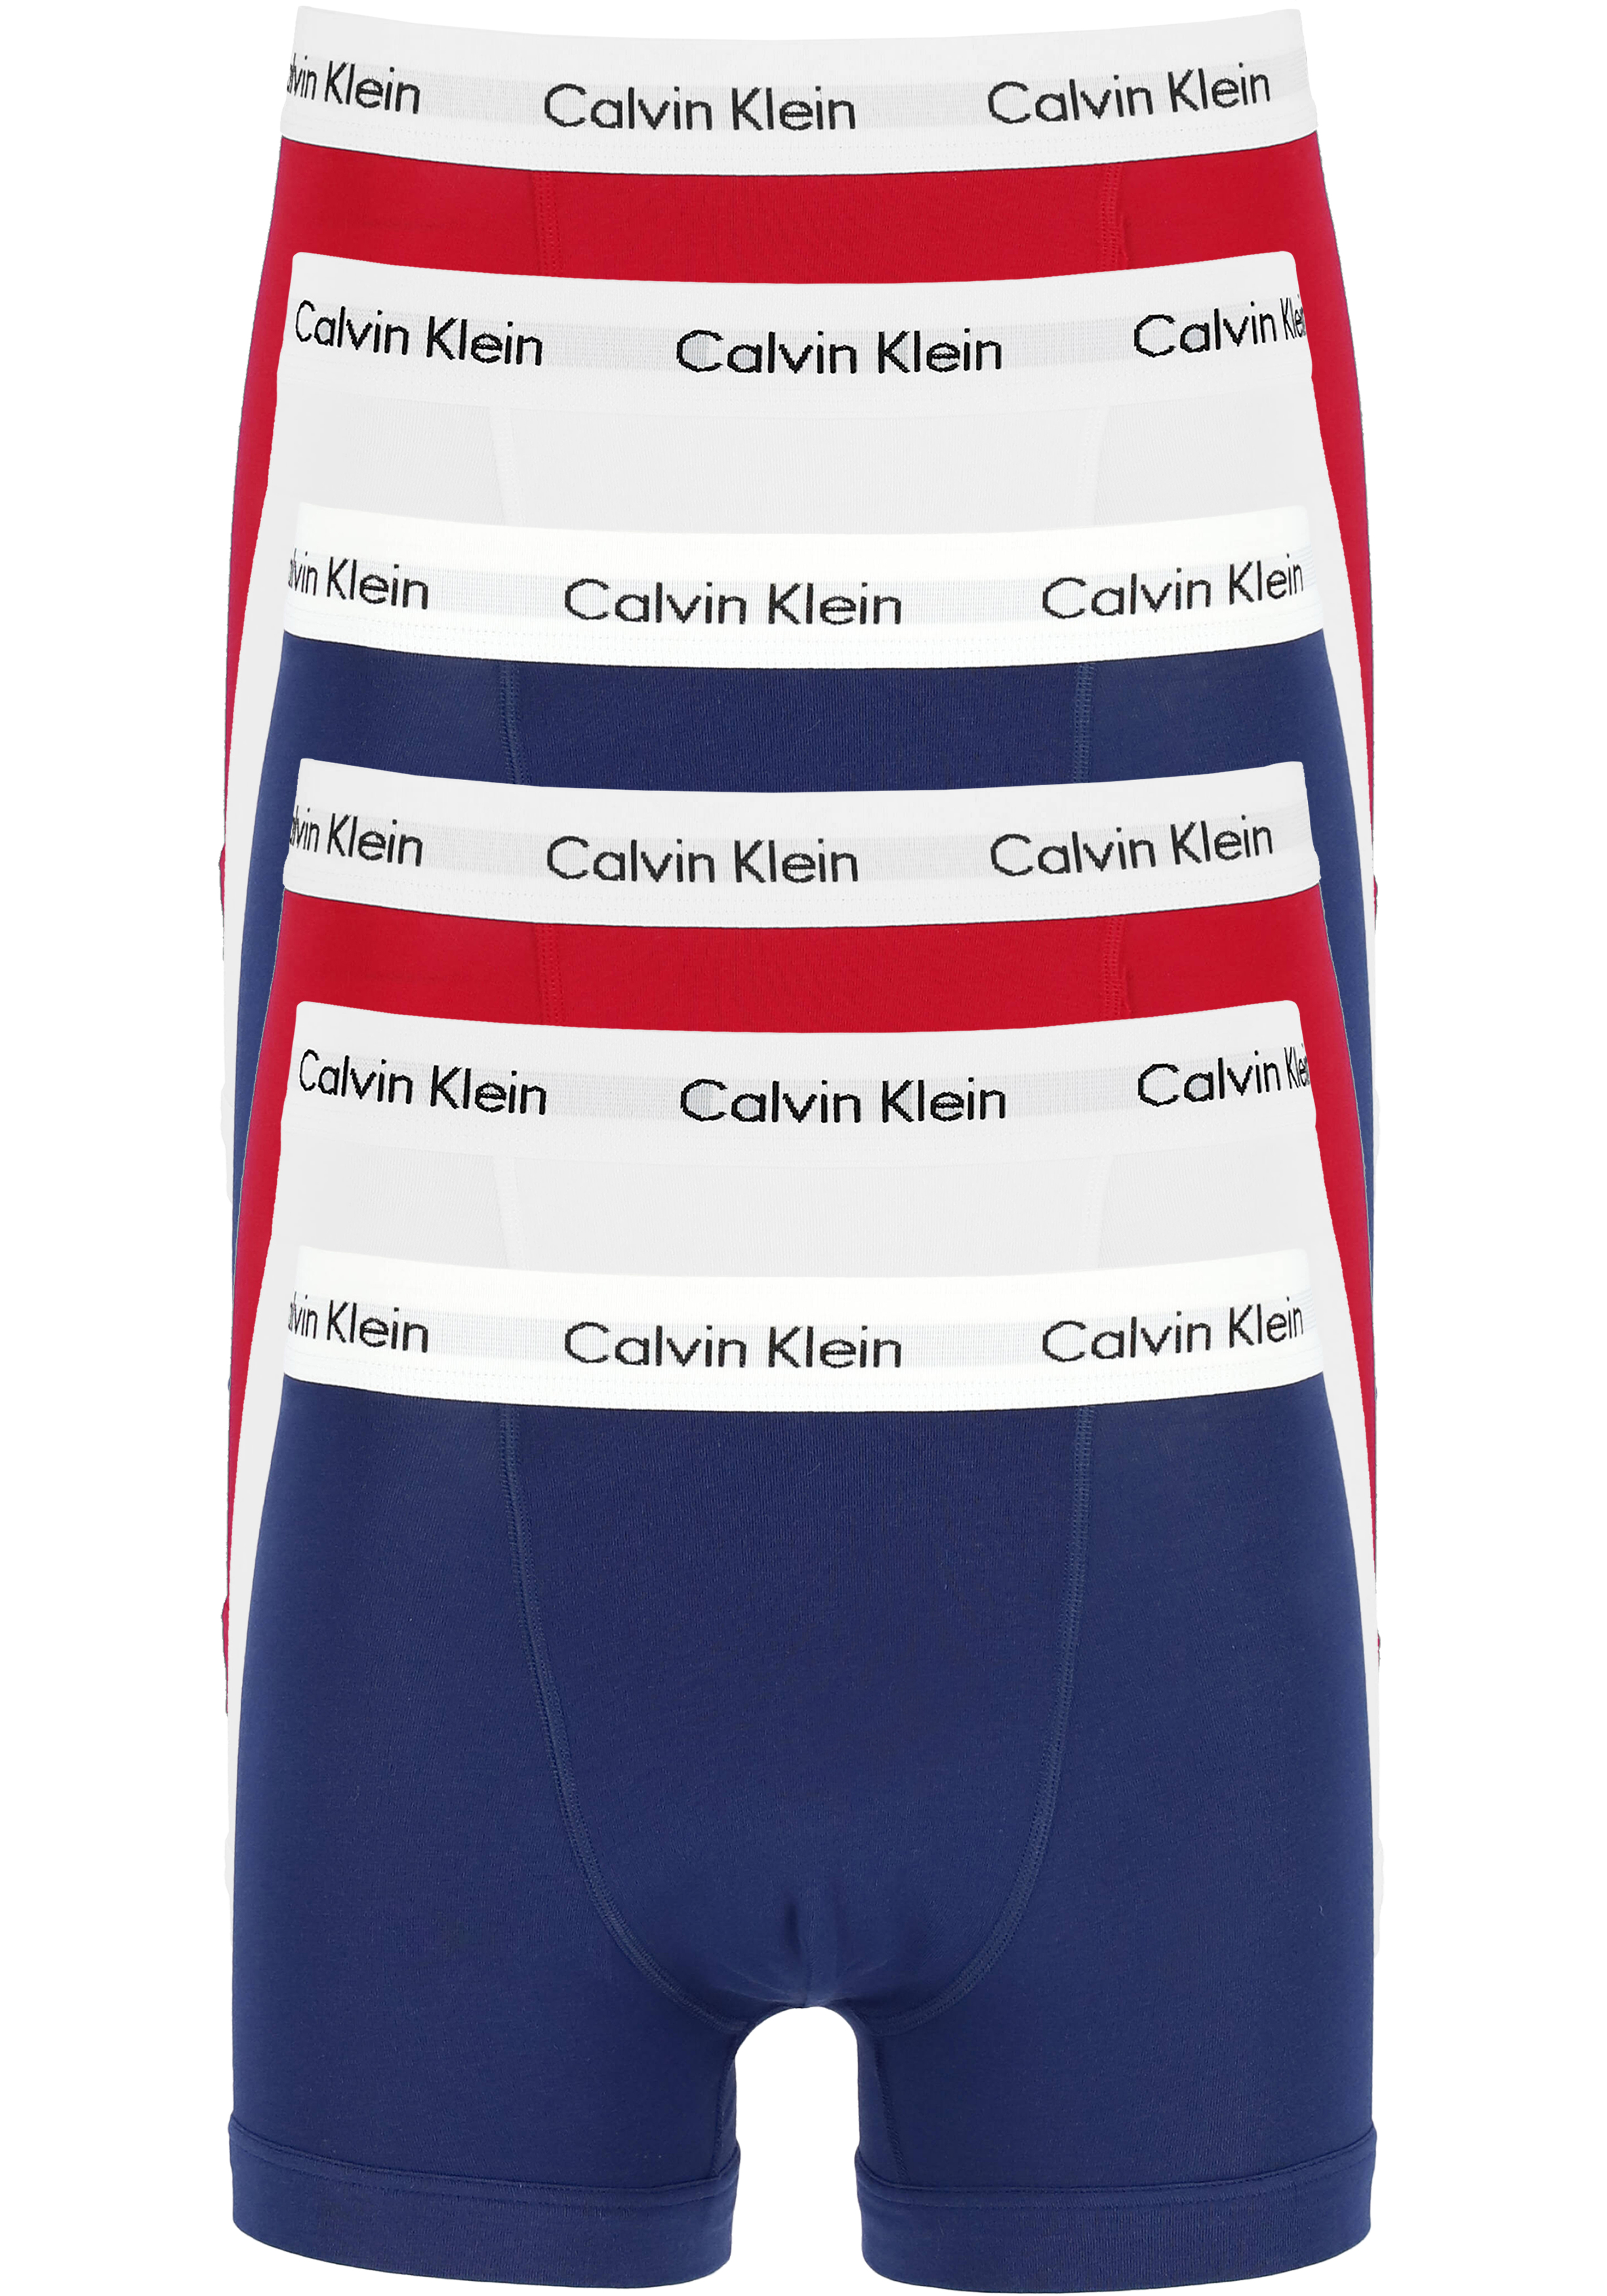 Brandweerman lager doel Actie 6-pack: Calvin Klein trunks, heren boxers normale lengte, rood,... -  Zomer SALE tot 50% korting